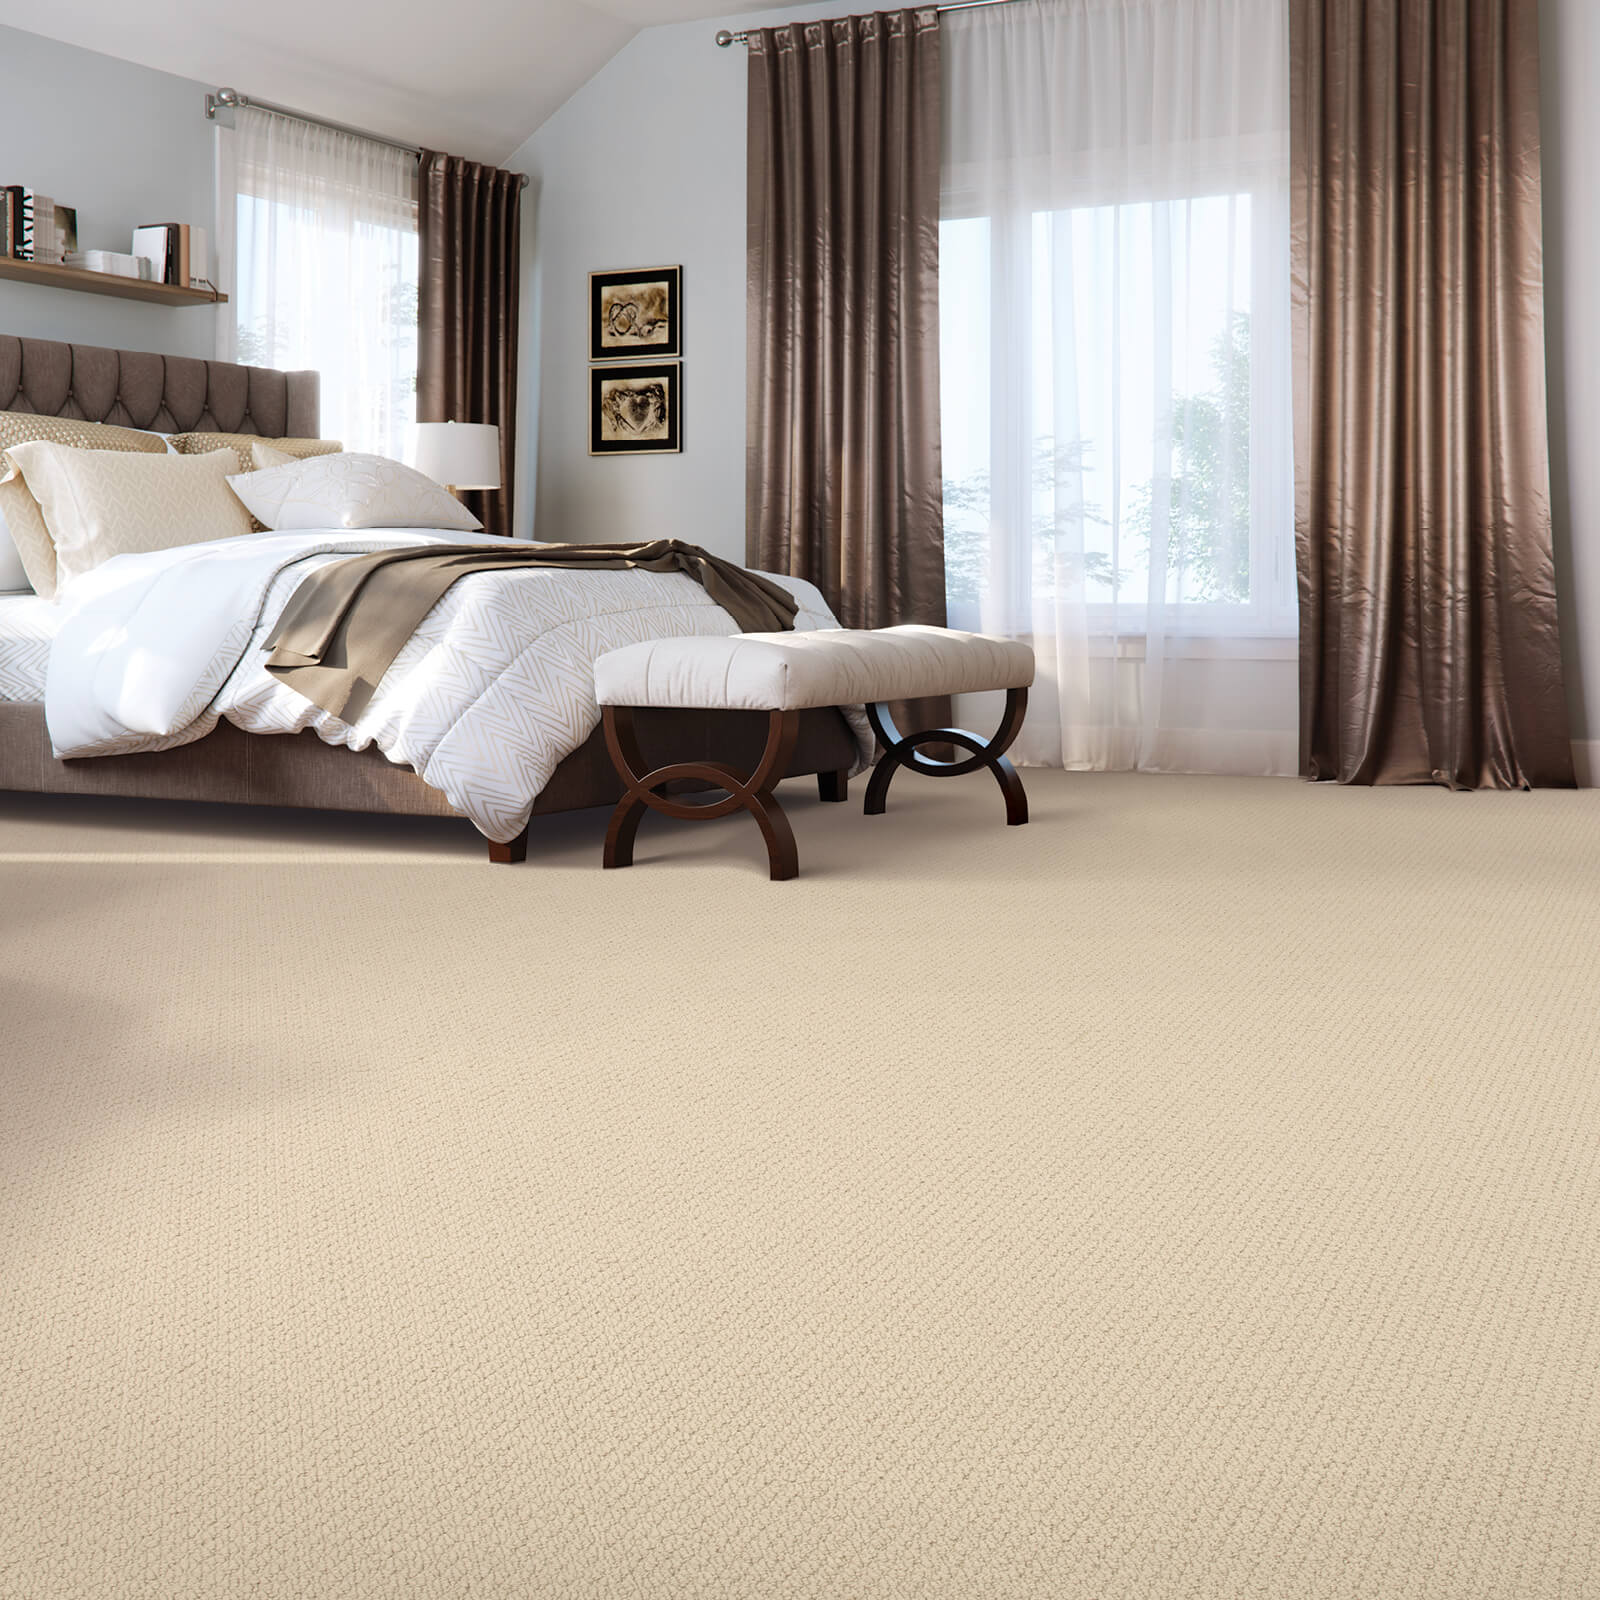 Bedroom carpet flooring | Colonial Interiors